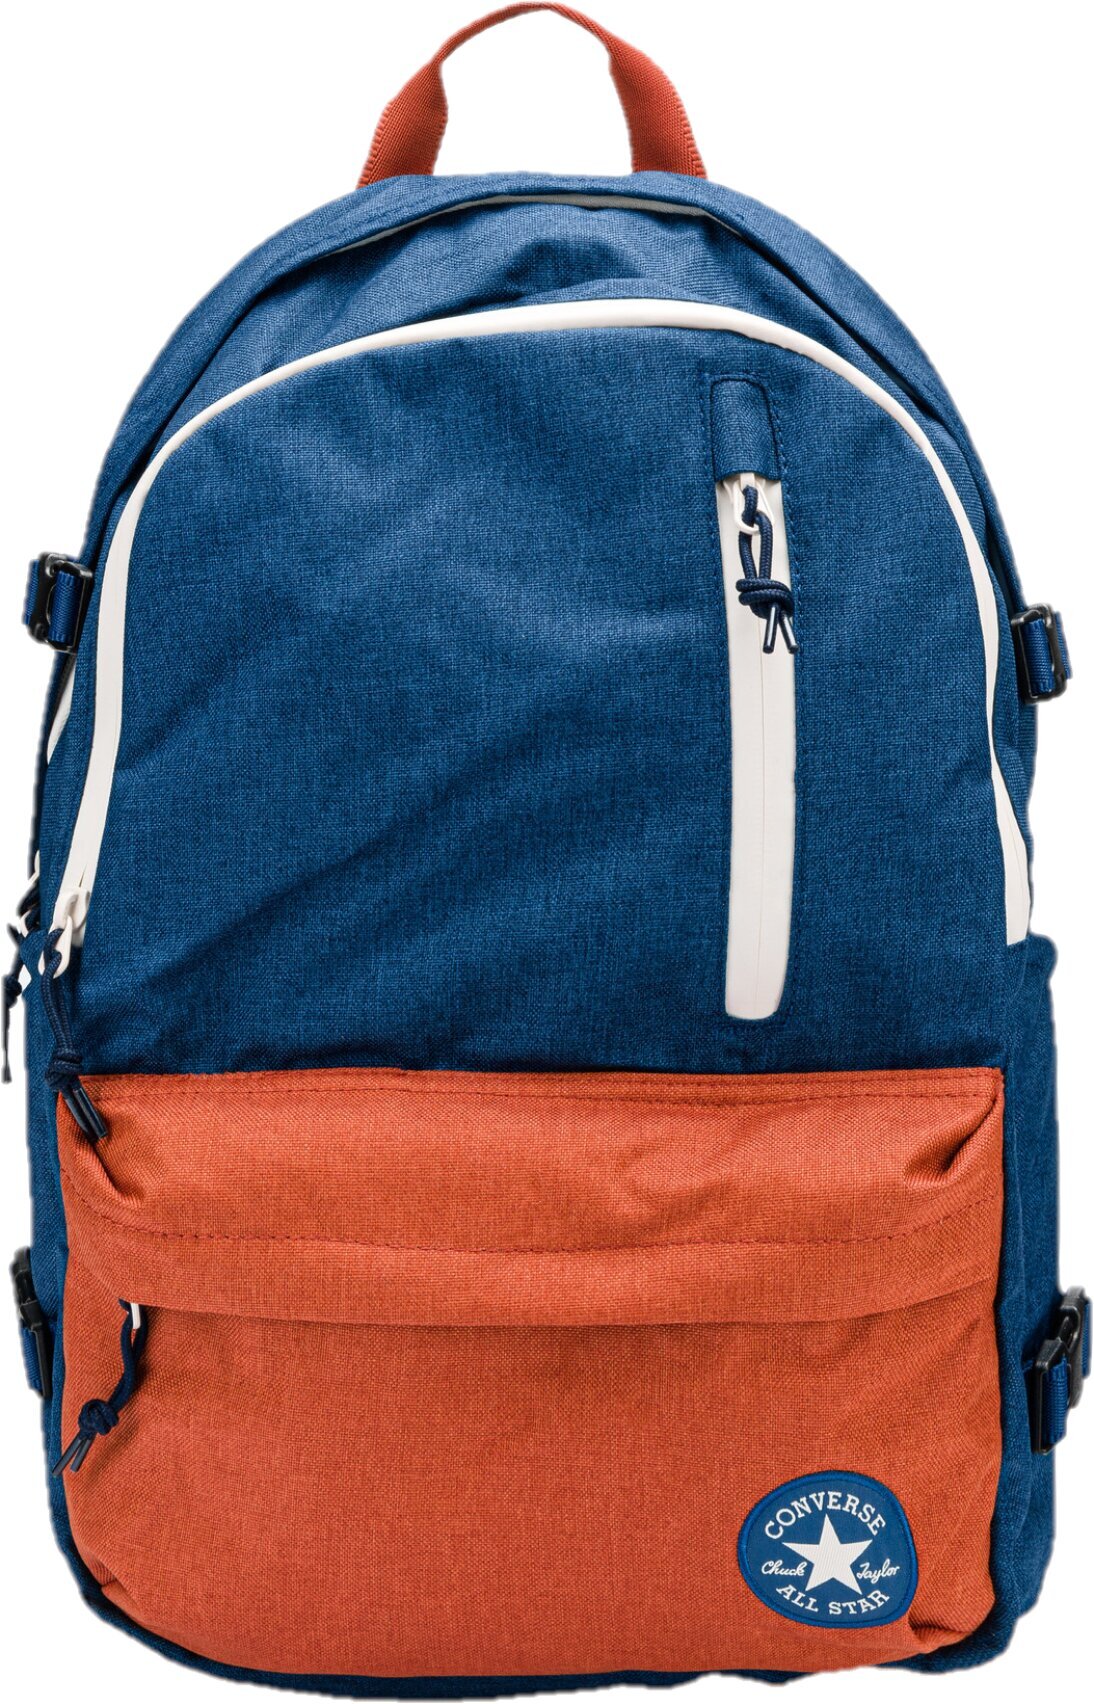 Kuprinė Converse Kuprinė Straight Edge Backpack Blue Orange, mėlyna kaina |  pigu.lt